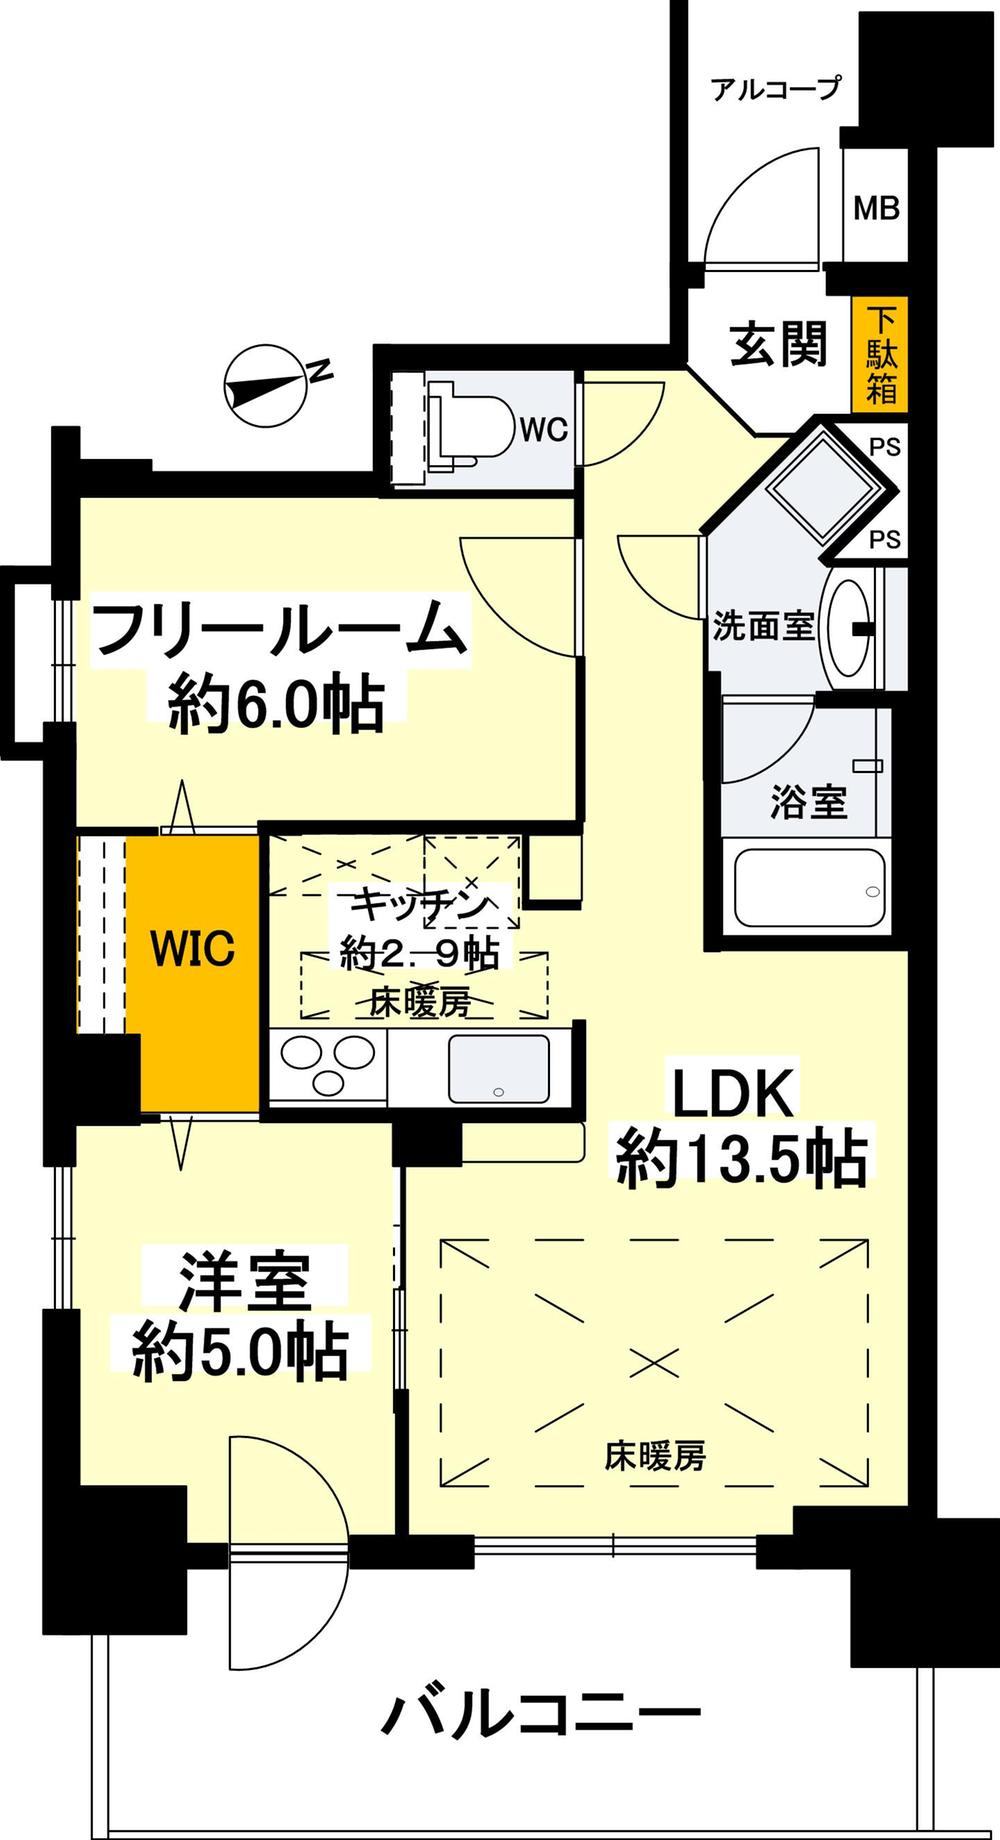 Floor plan. 2LDK, Price 25.6 million yen, Occupied area 55.91 sq m , Balcony area 12.84 sq m